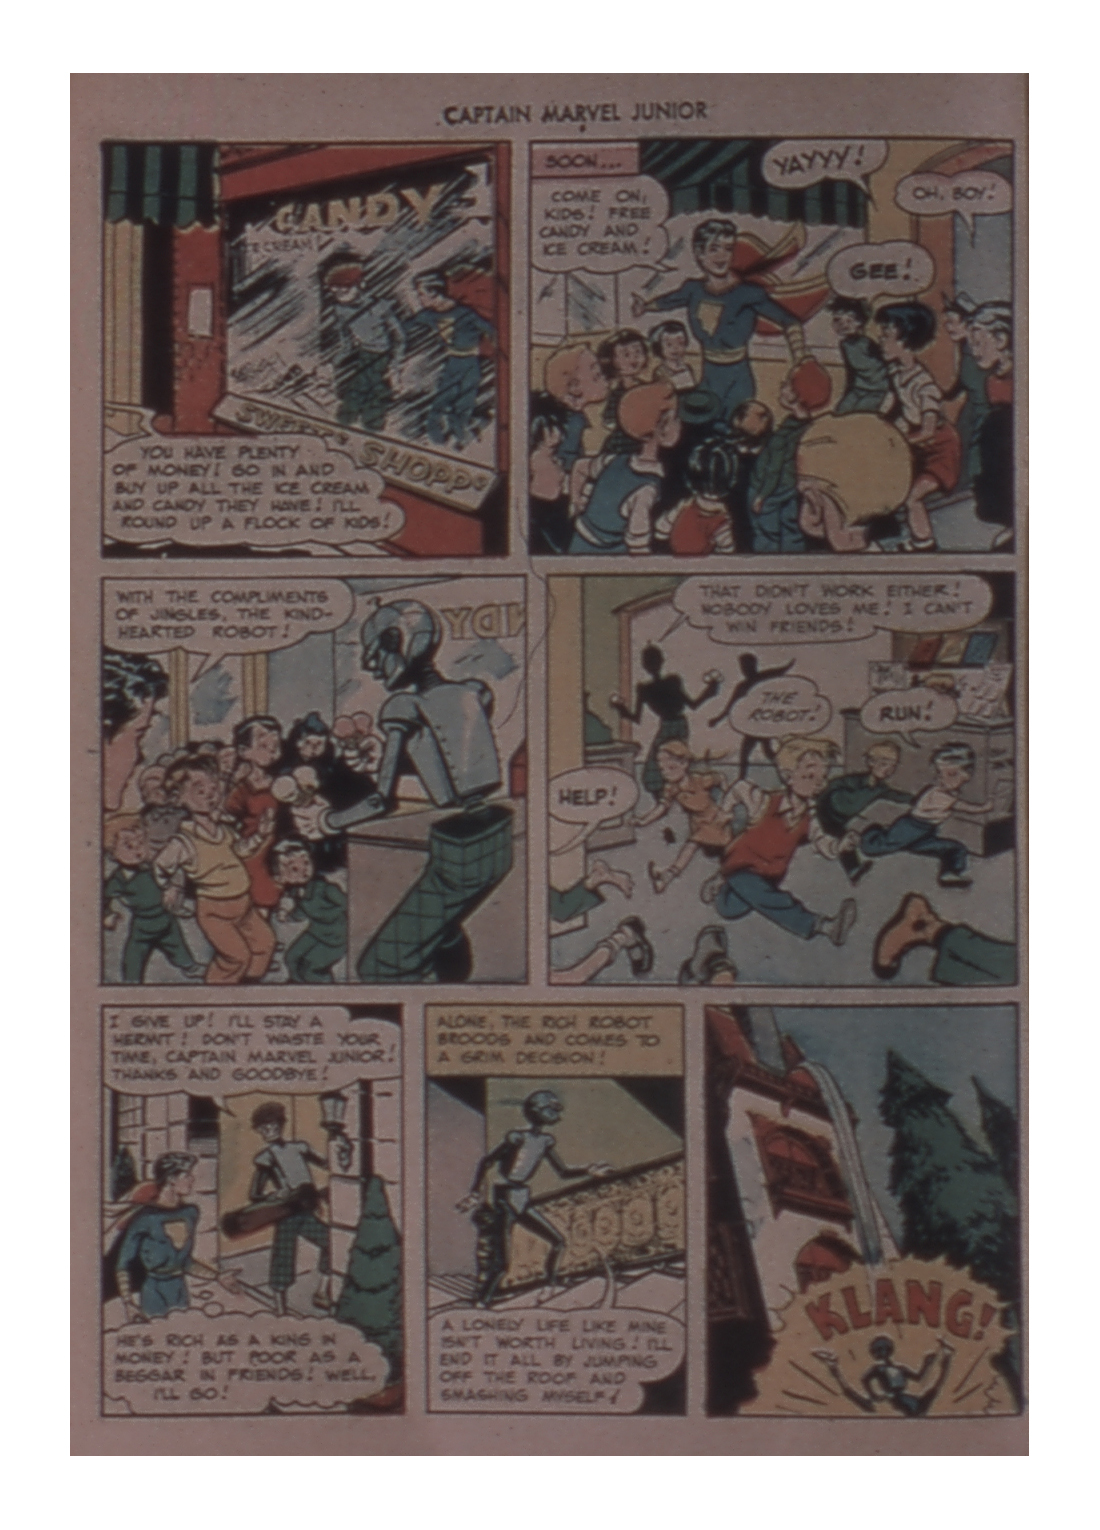 Read online Captain Marvel, Jr. comic -  Issue #73 - 10